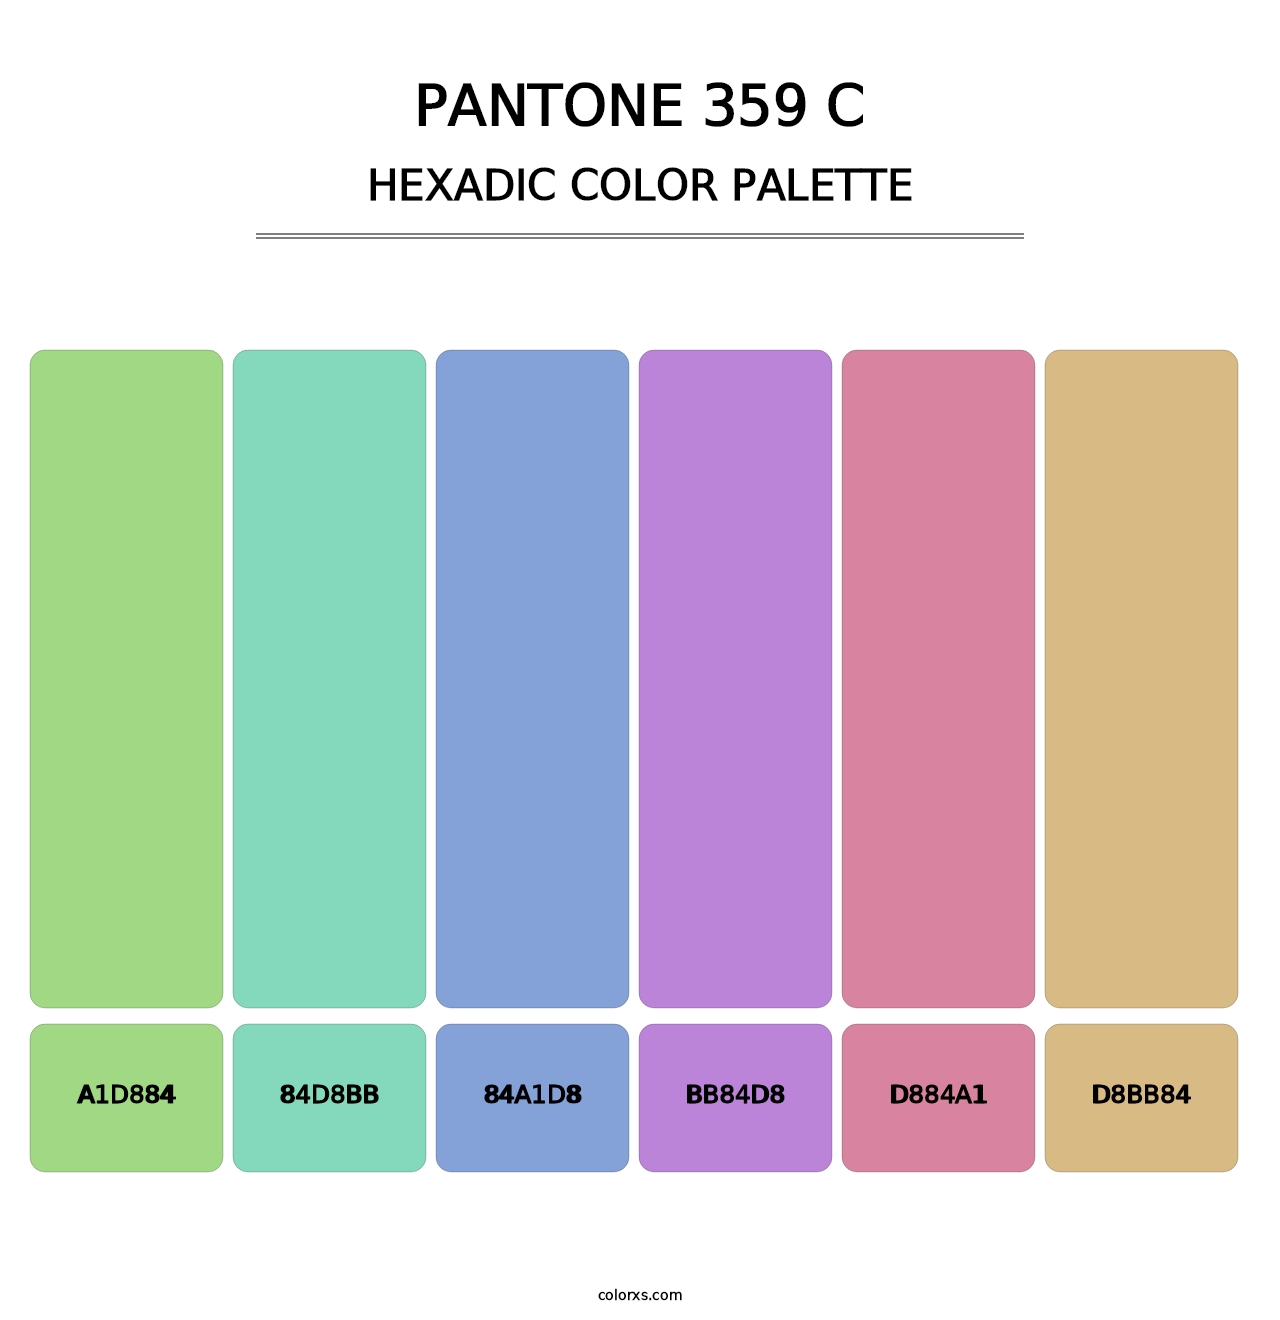 PANTONE 359 C - Hexadic Color Palette